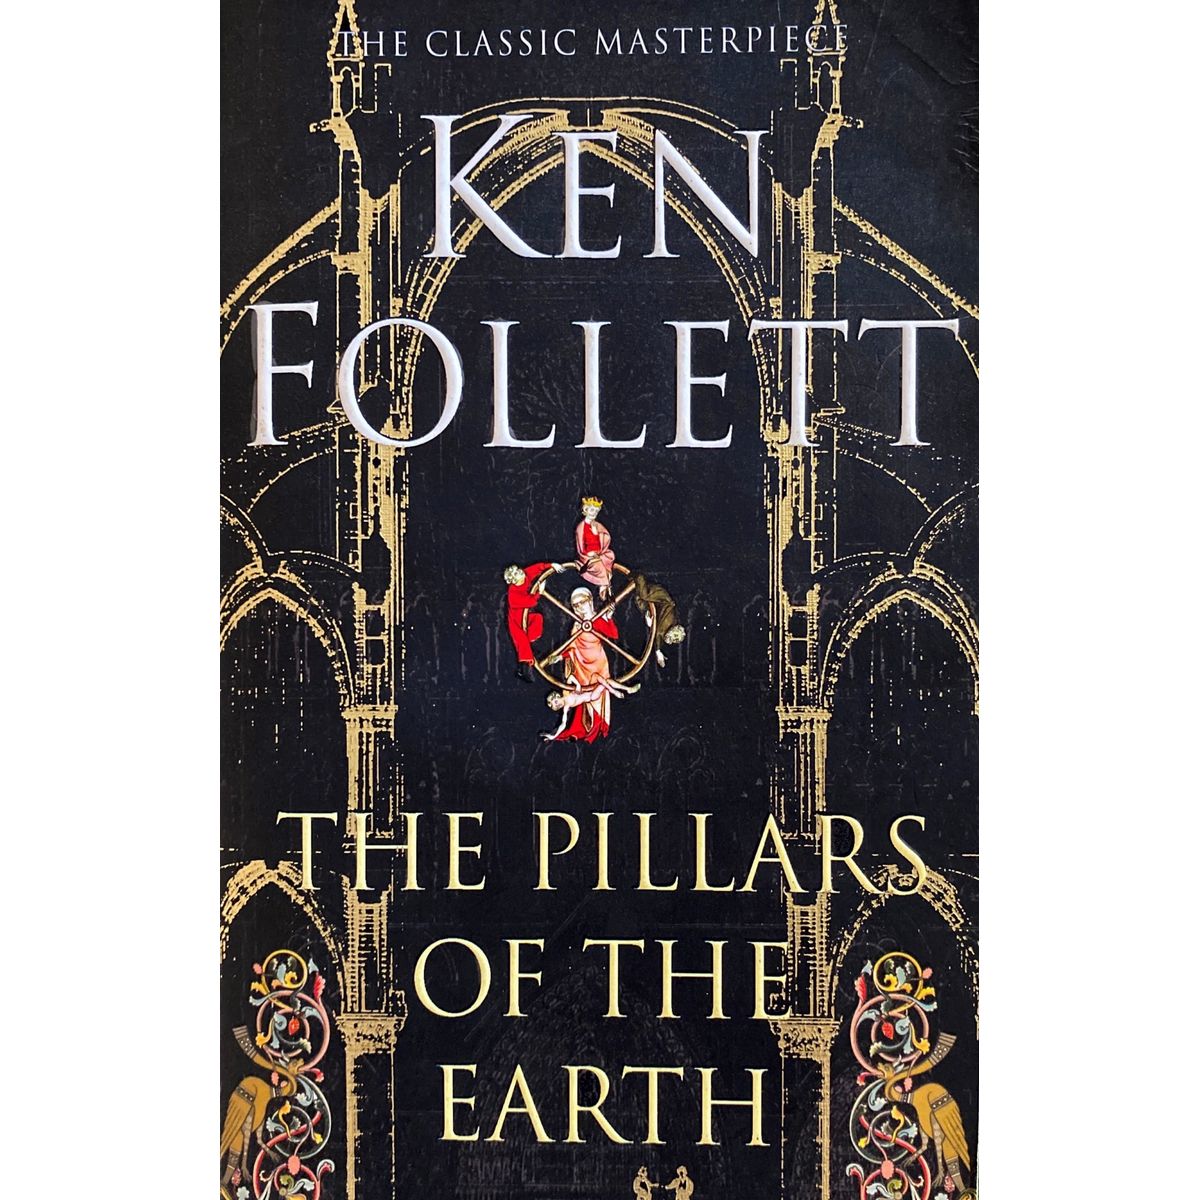 ISBN: 9780330450133 / 0330450131 - The Pillars of the Earth by Ken Follett [2007]